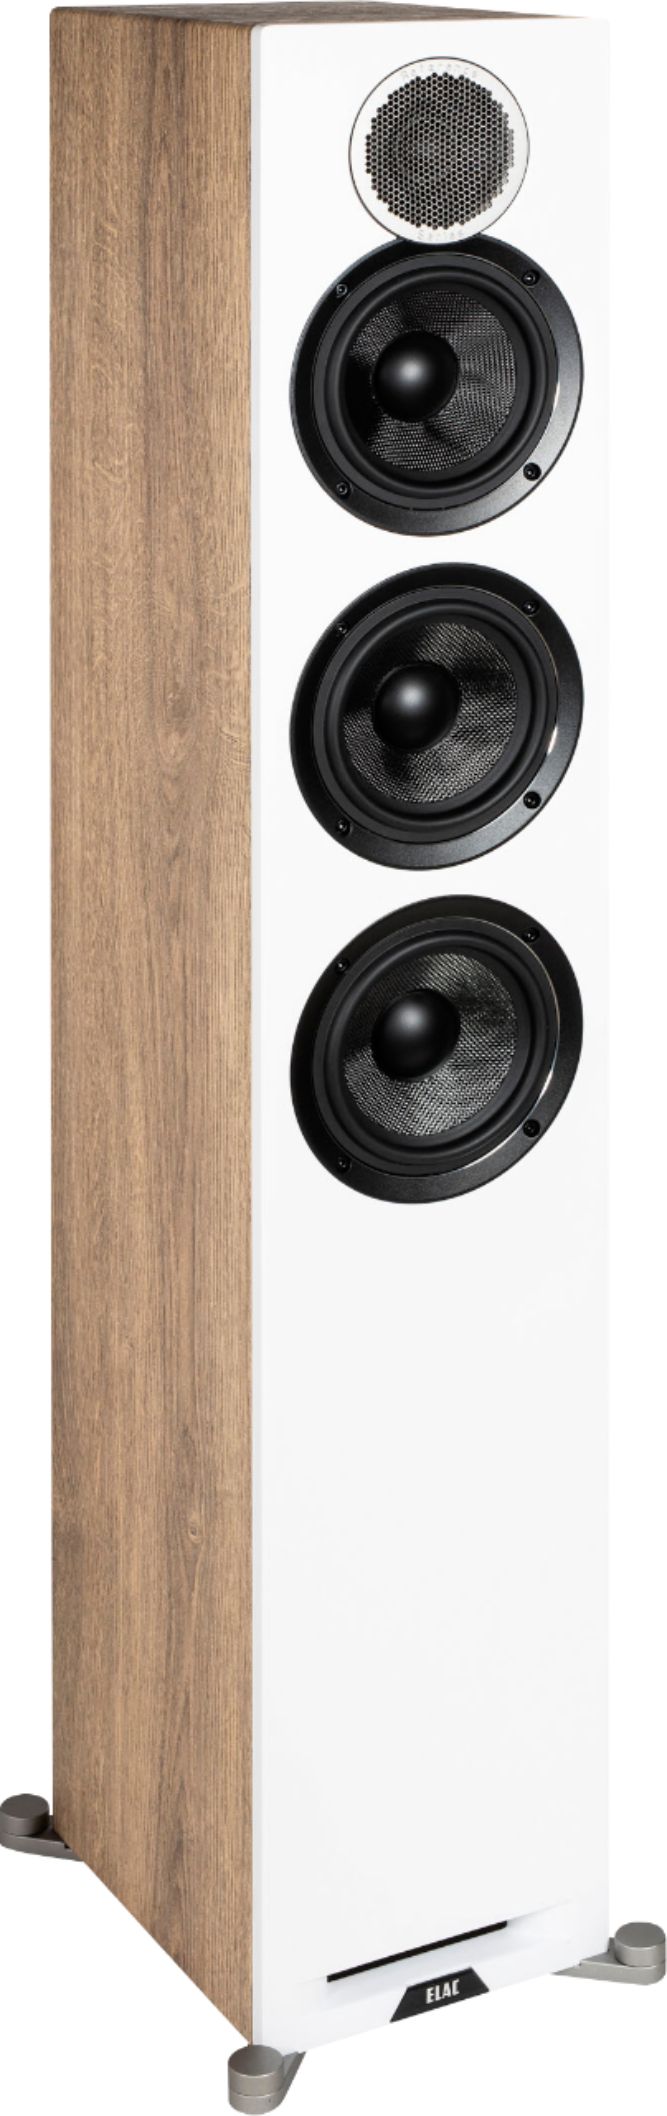 Angle View: ELAC - Debut Reference Floorstanding Speaker - White/Oak